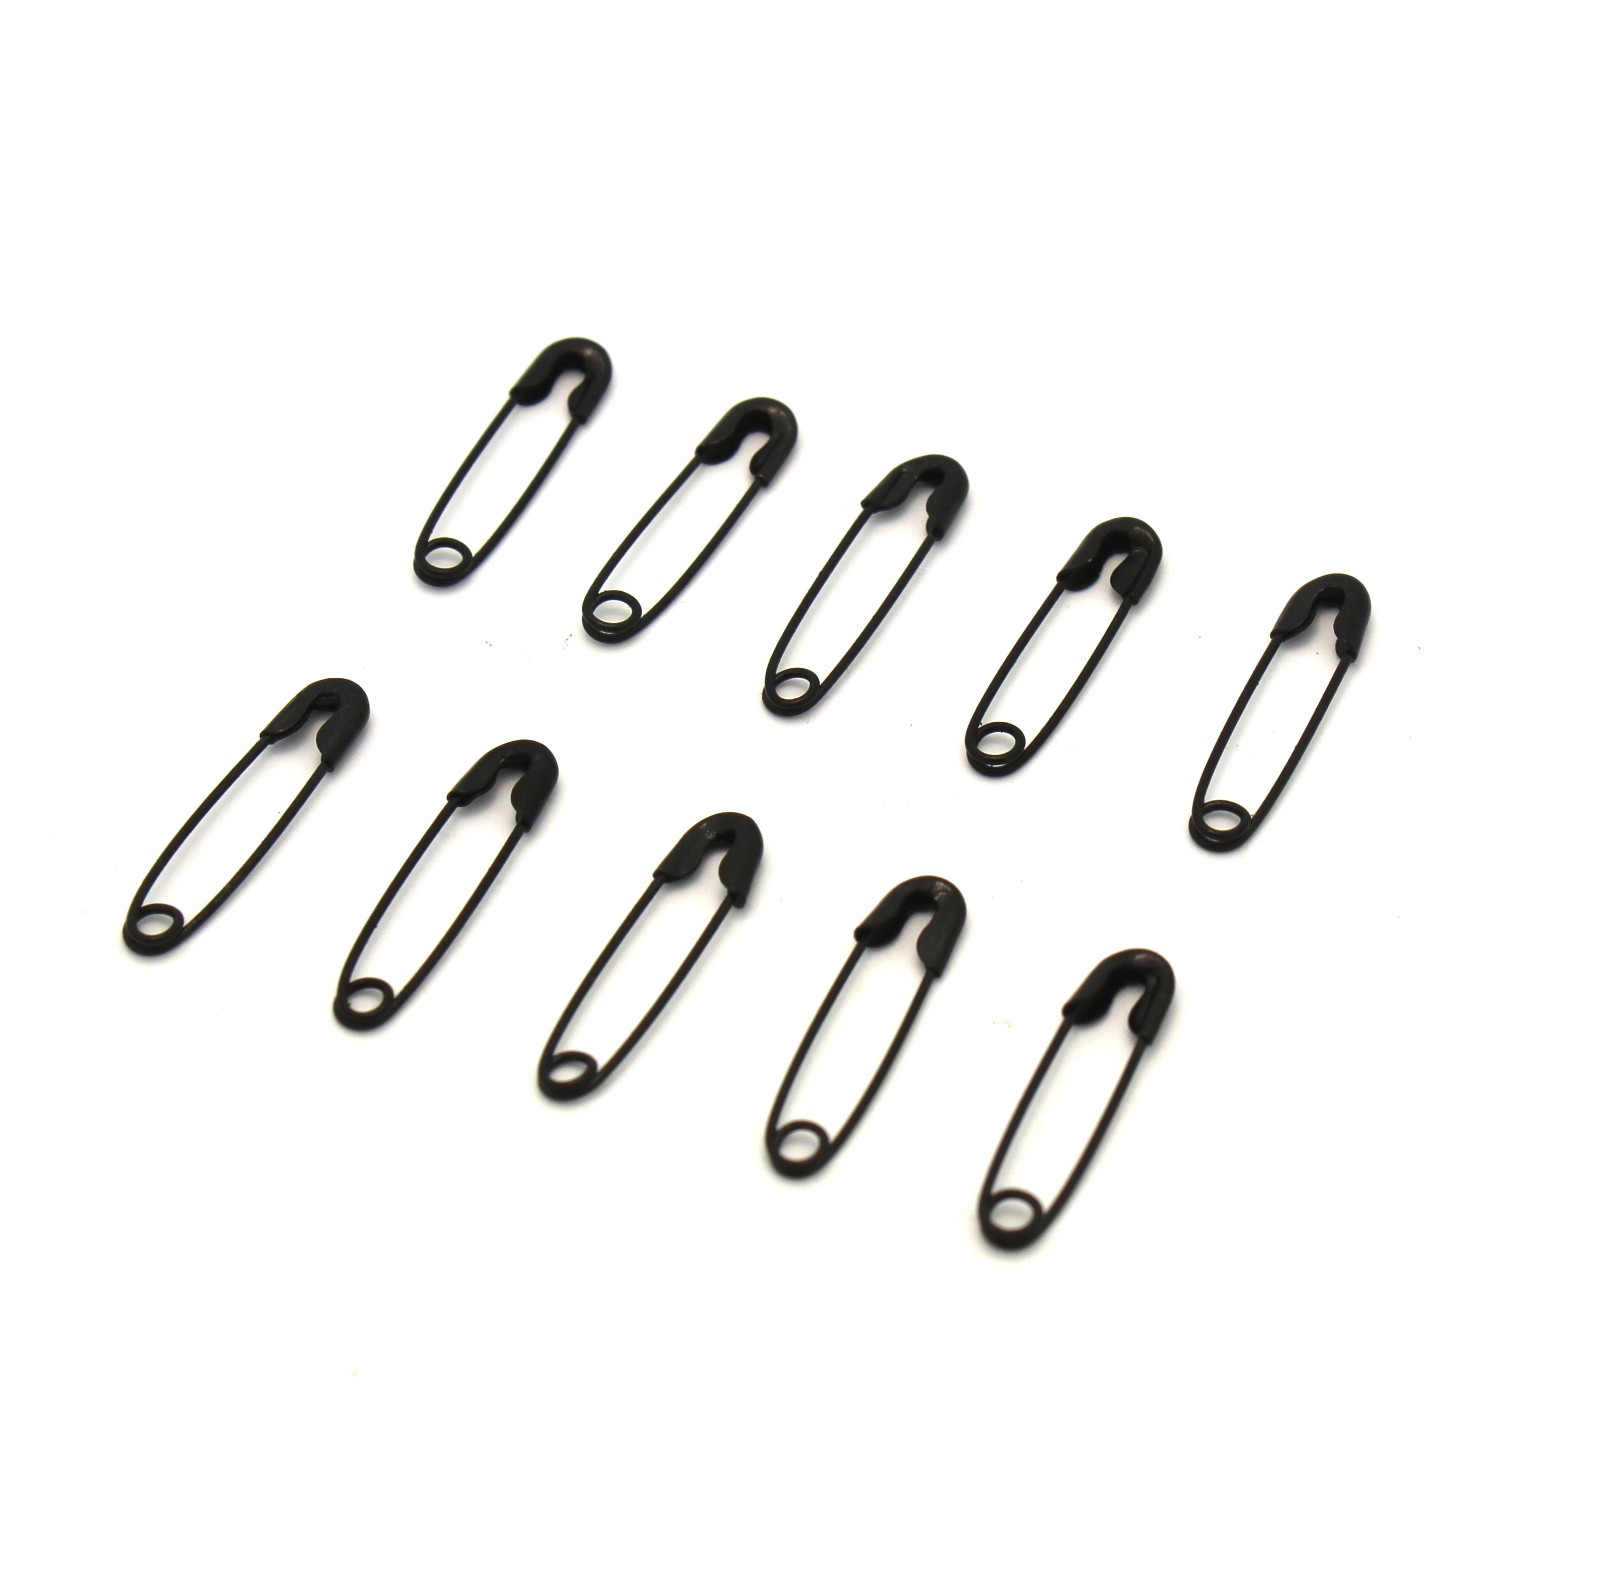 $1.49 - Black Safety Pins (10 pack) - Tinkersphere